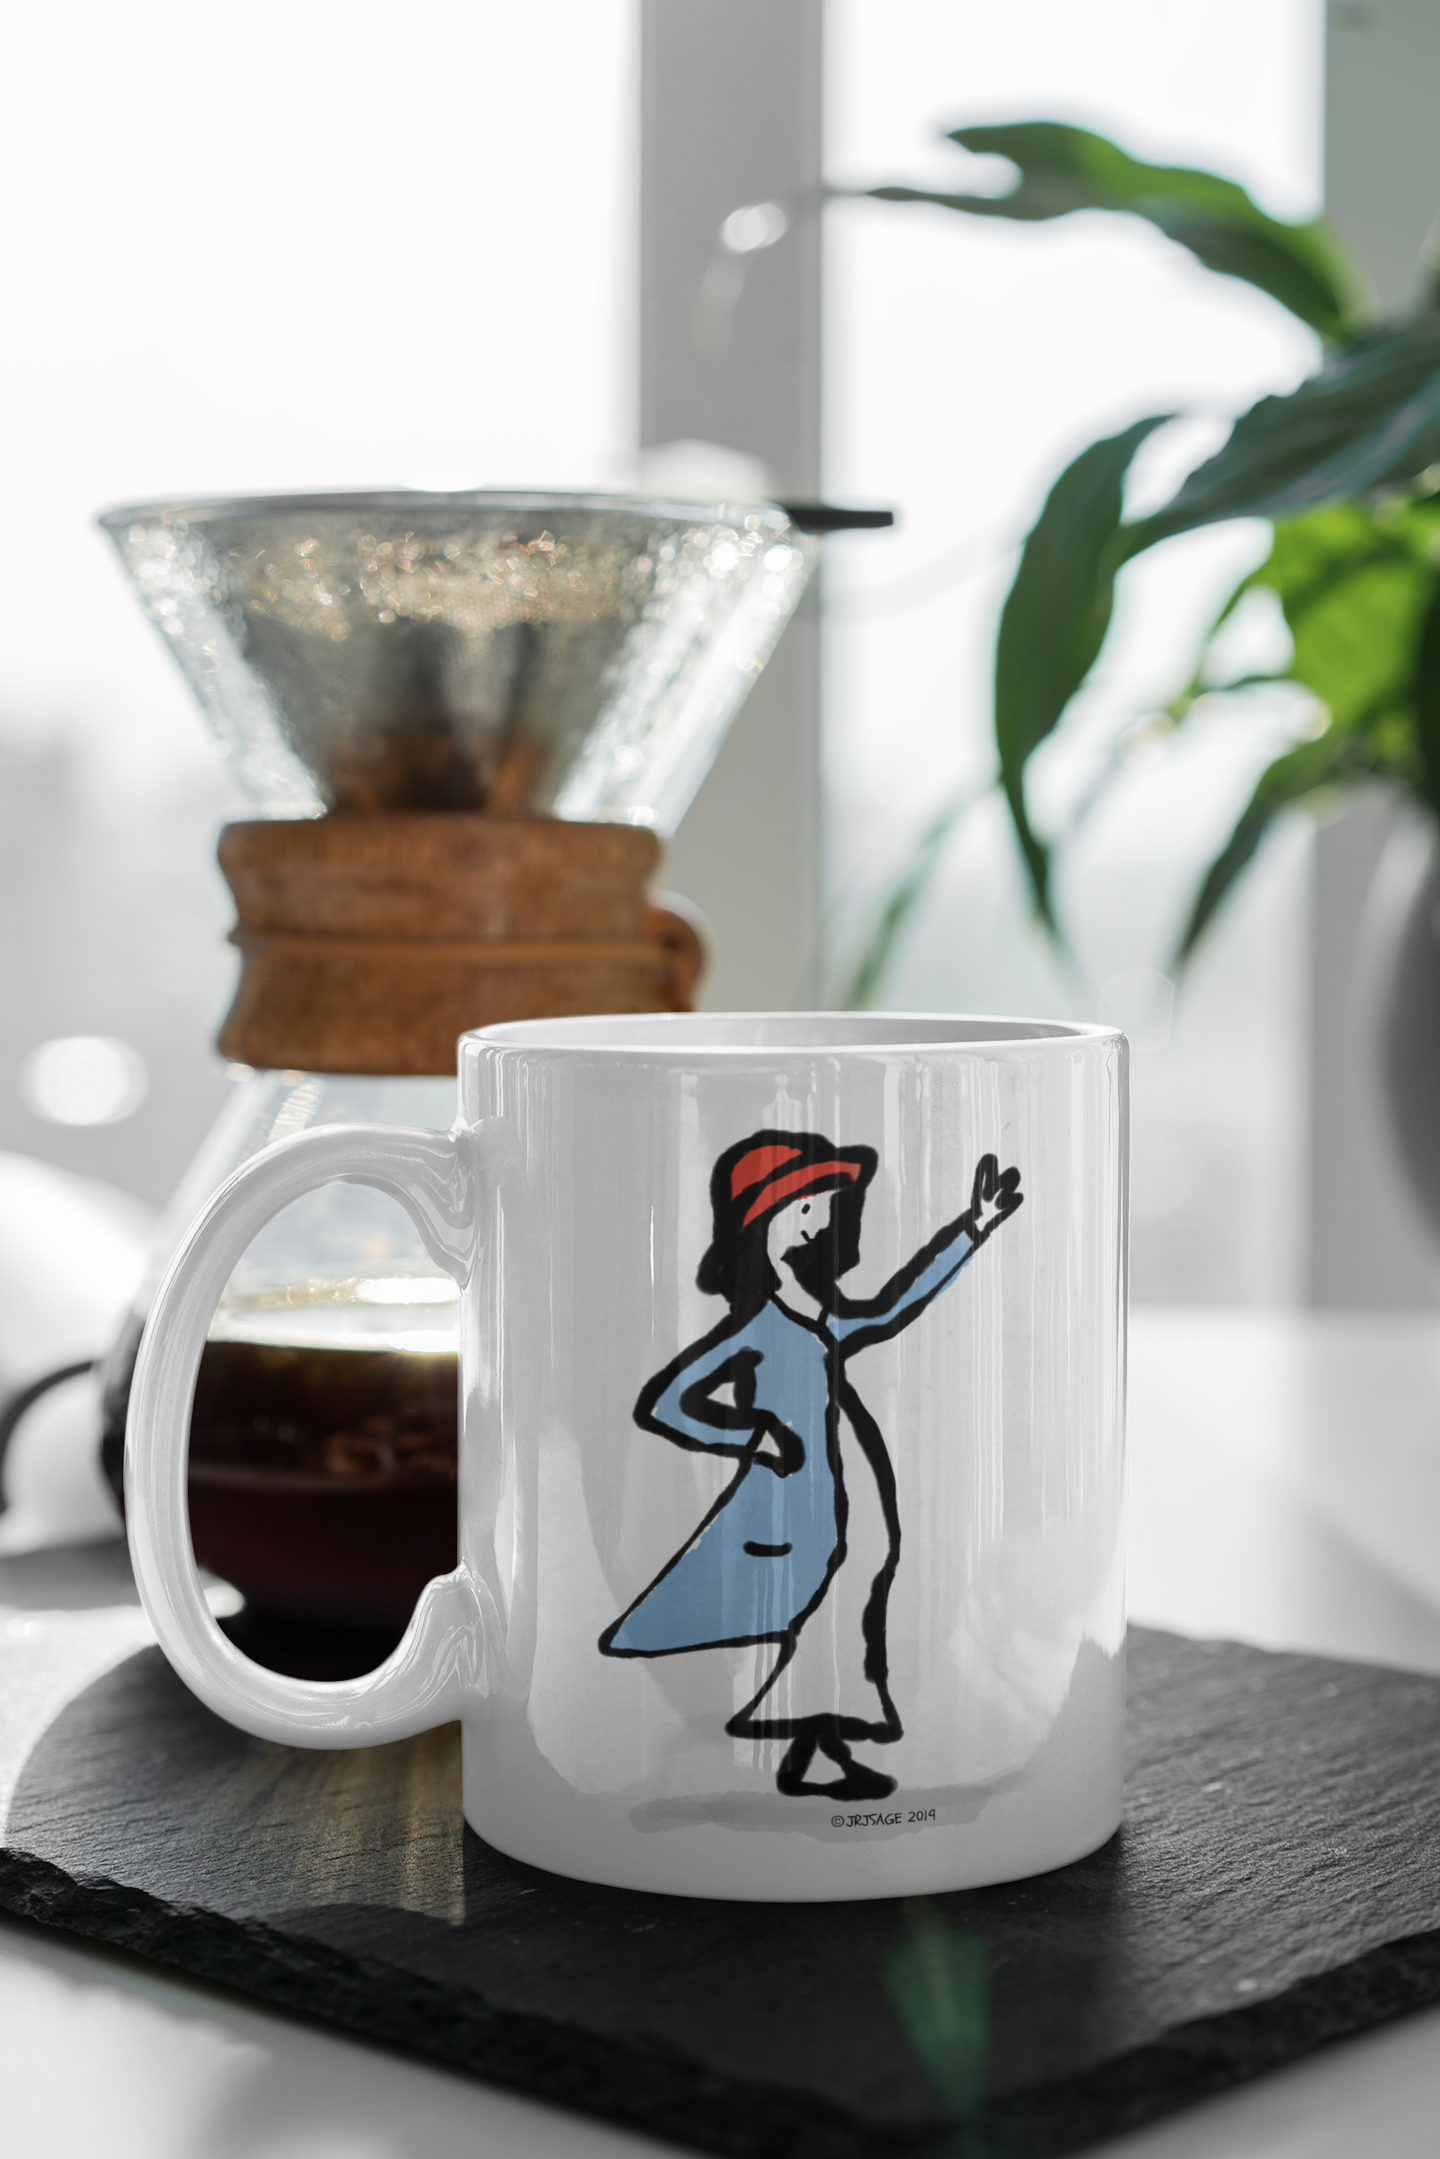 Waving Girl mug design - Original illustrated waving girl coffee mugs by Hector and Bone in kitchen